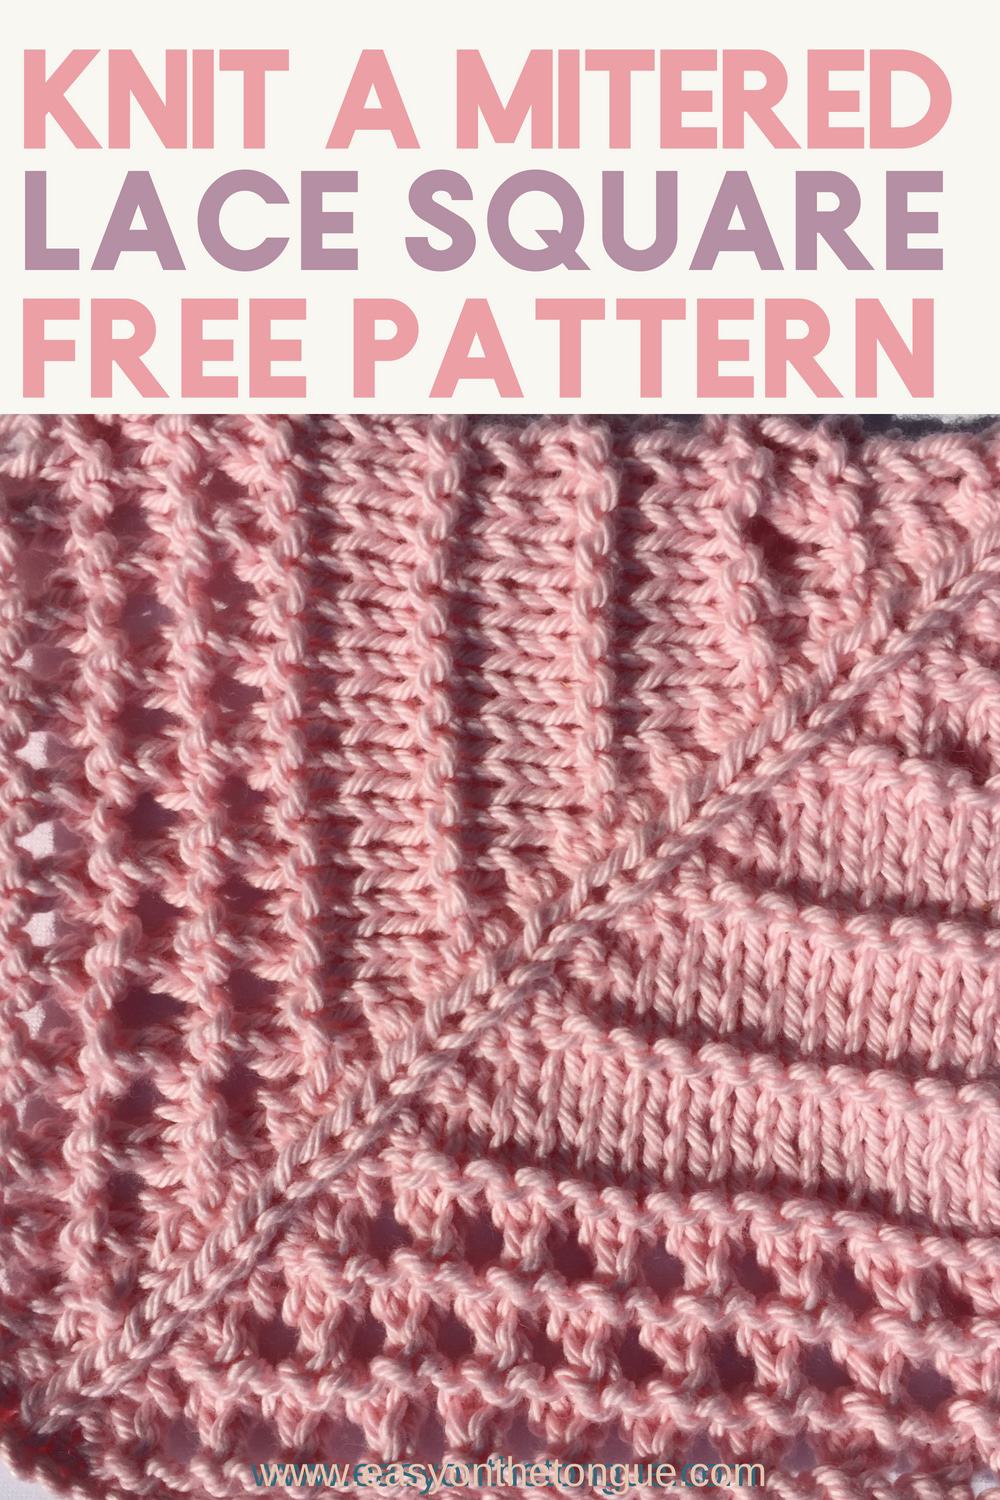 Knit Mitred Lace Square Pattern miteredsquare knitlacesquare knitsquare Knitting Stitches – How to knit double moss stitch